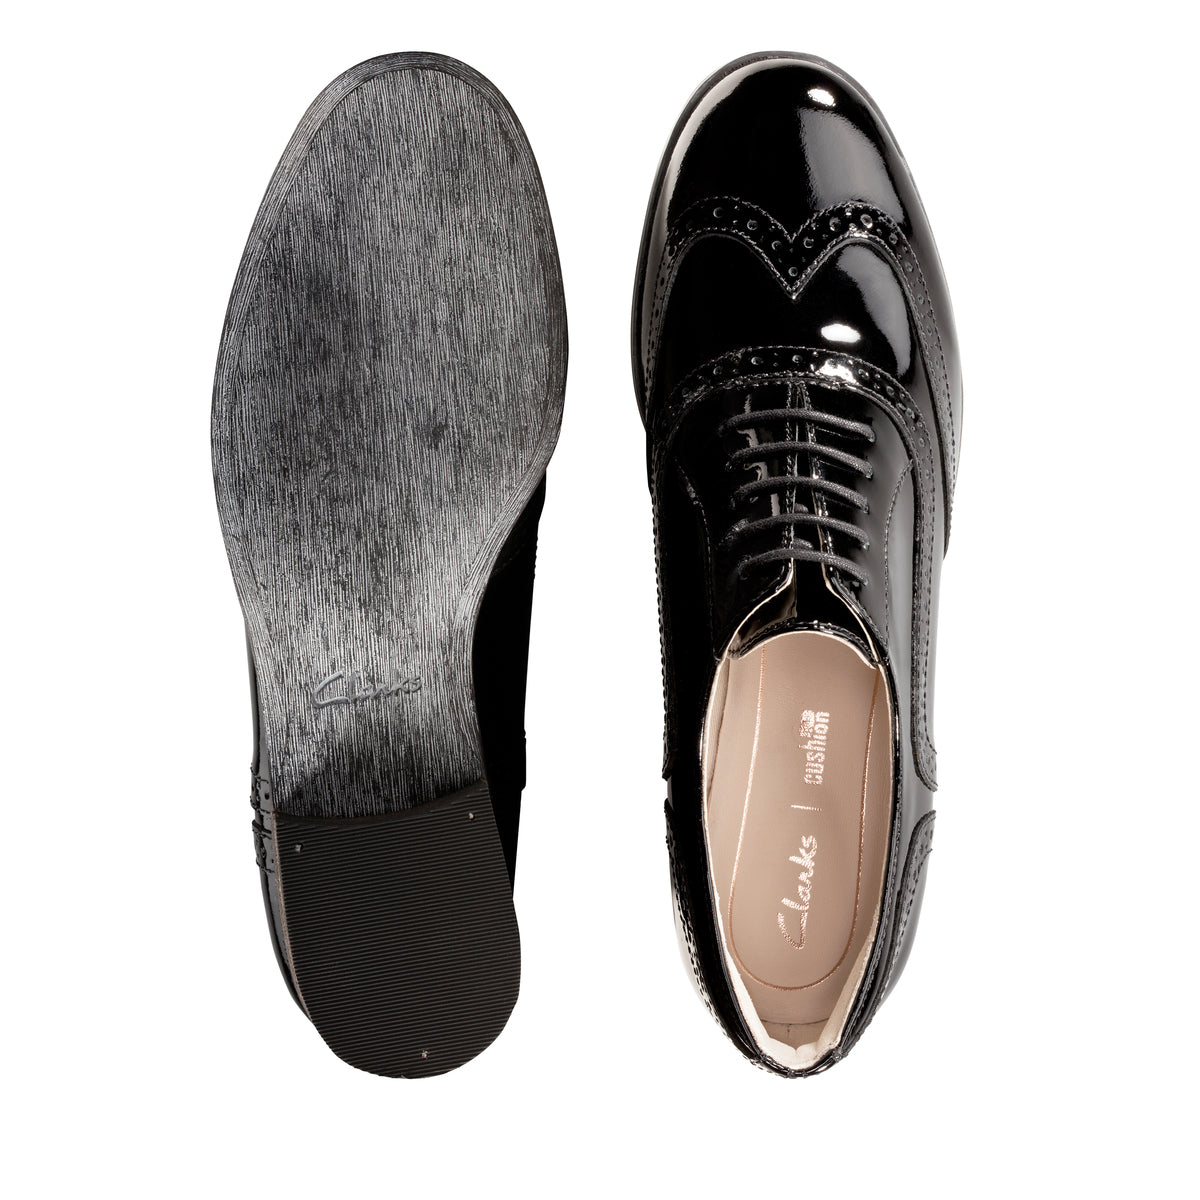 Zapatos Oxford De La Marca Clarks Modelo Hamble Oak Black Pat